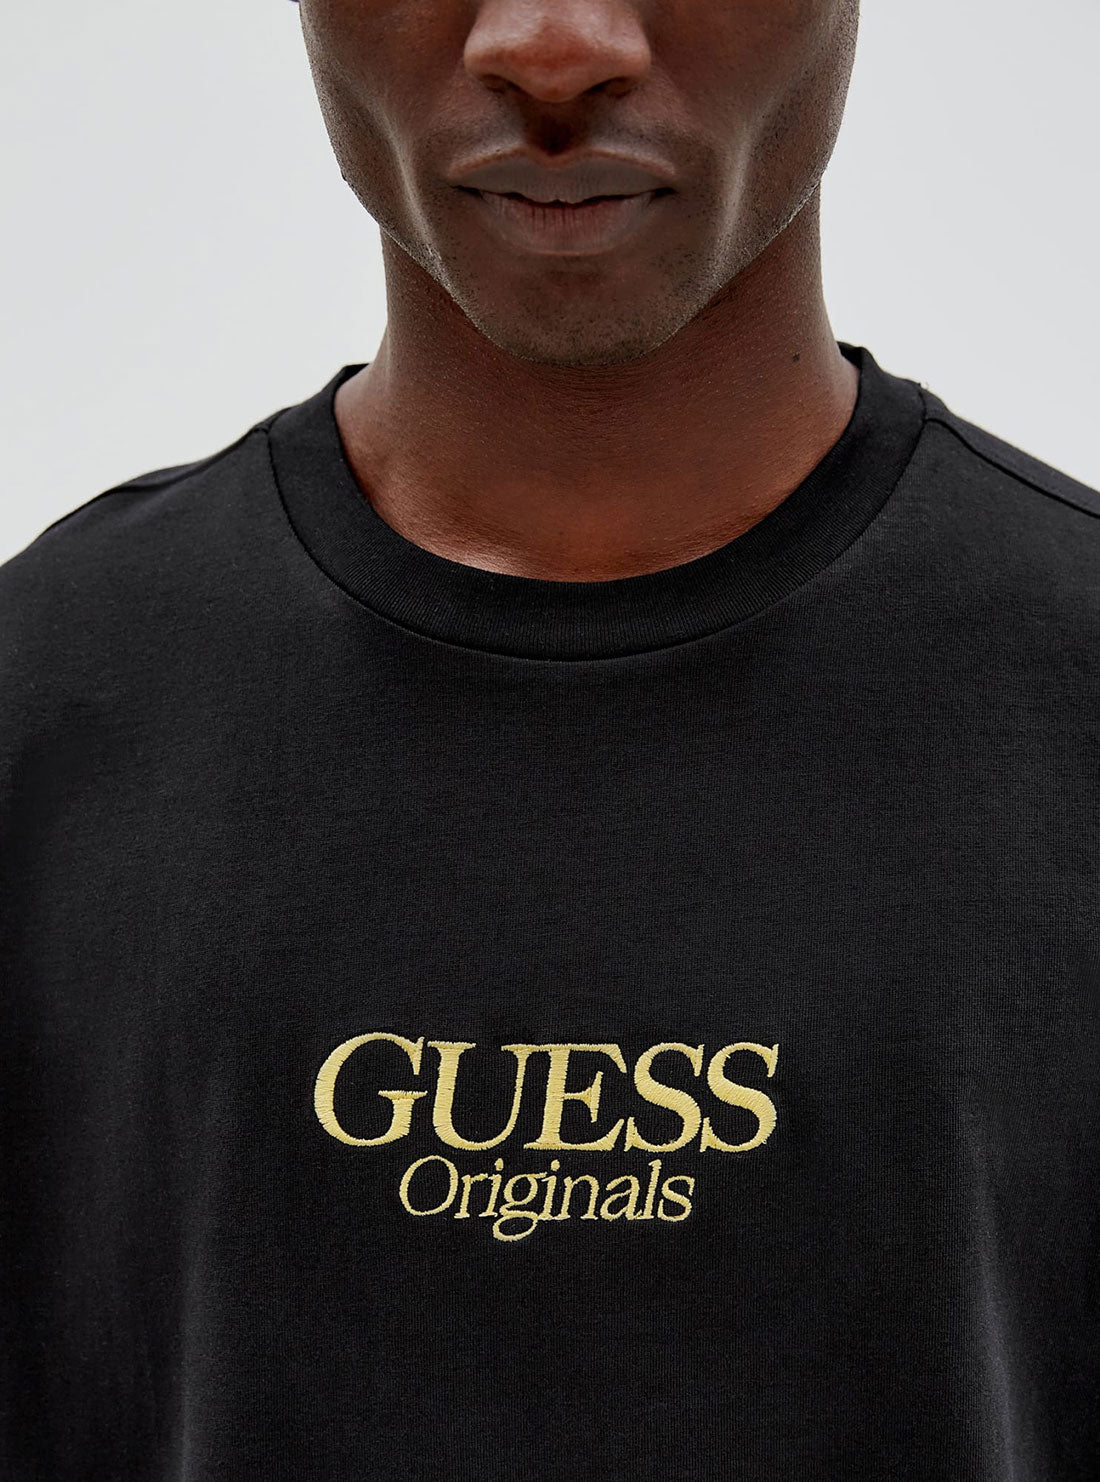 GUESS Mens GUESS Originals Black Austin Logo T-Shirt M2GI00K9XF2 Detail View